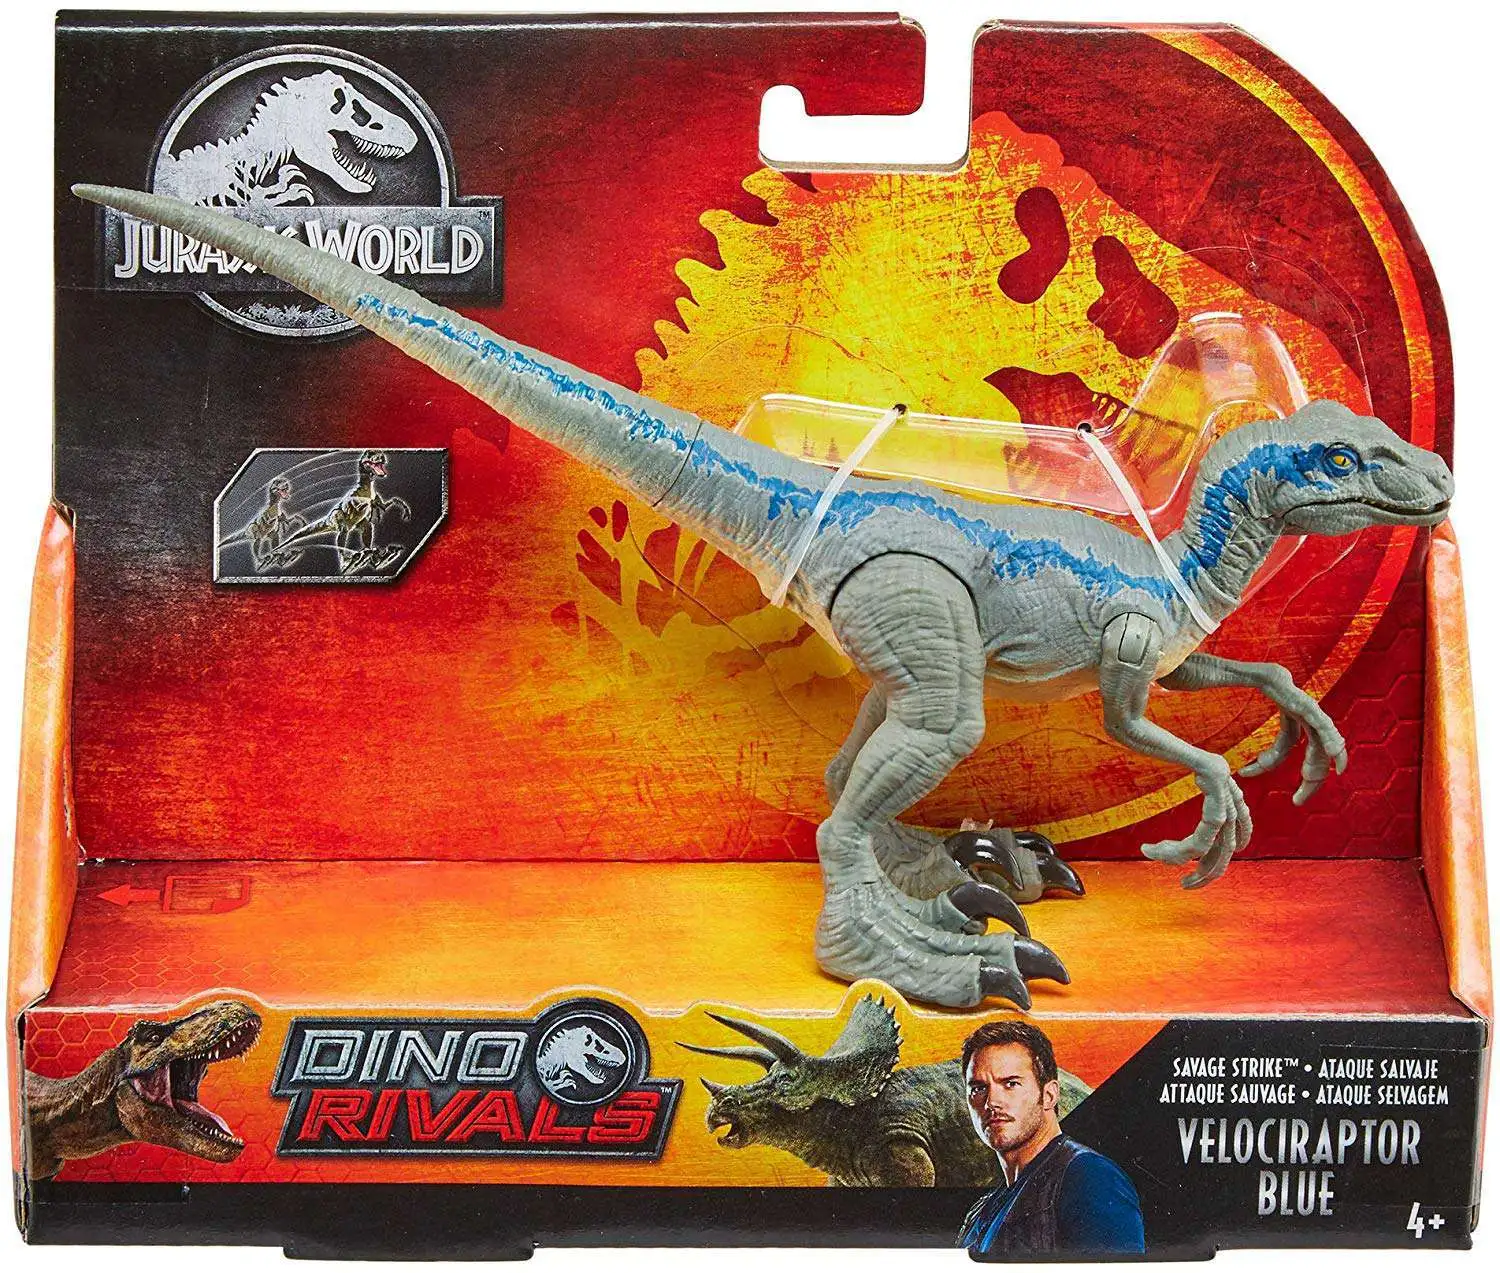 Jurassic World Dino Rivals Velociraptor charlie Action Figure Mattel Toy New 